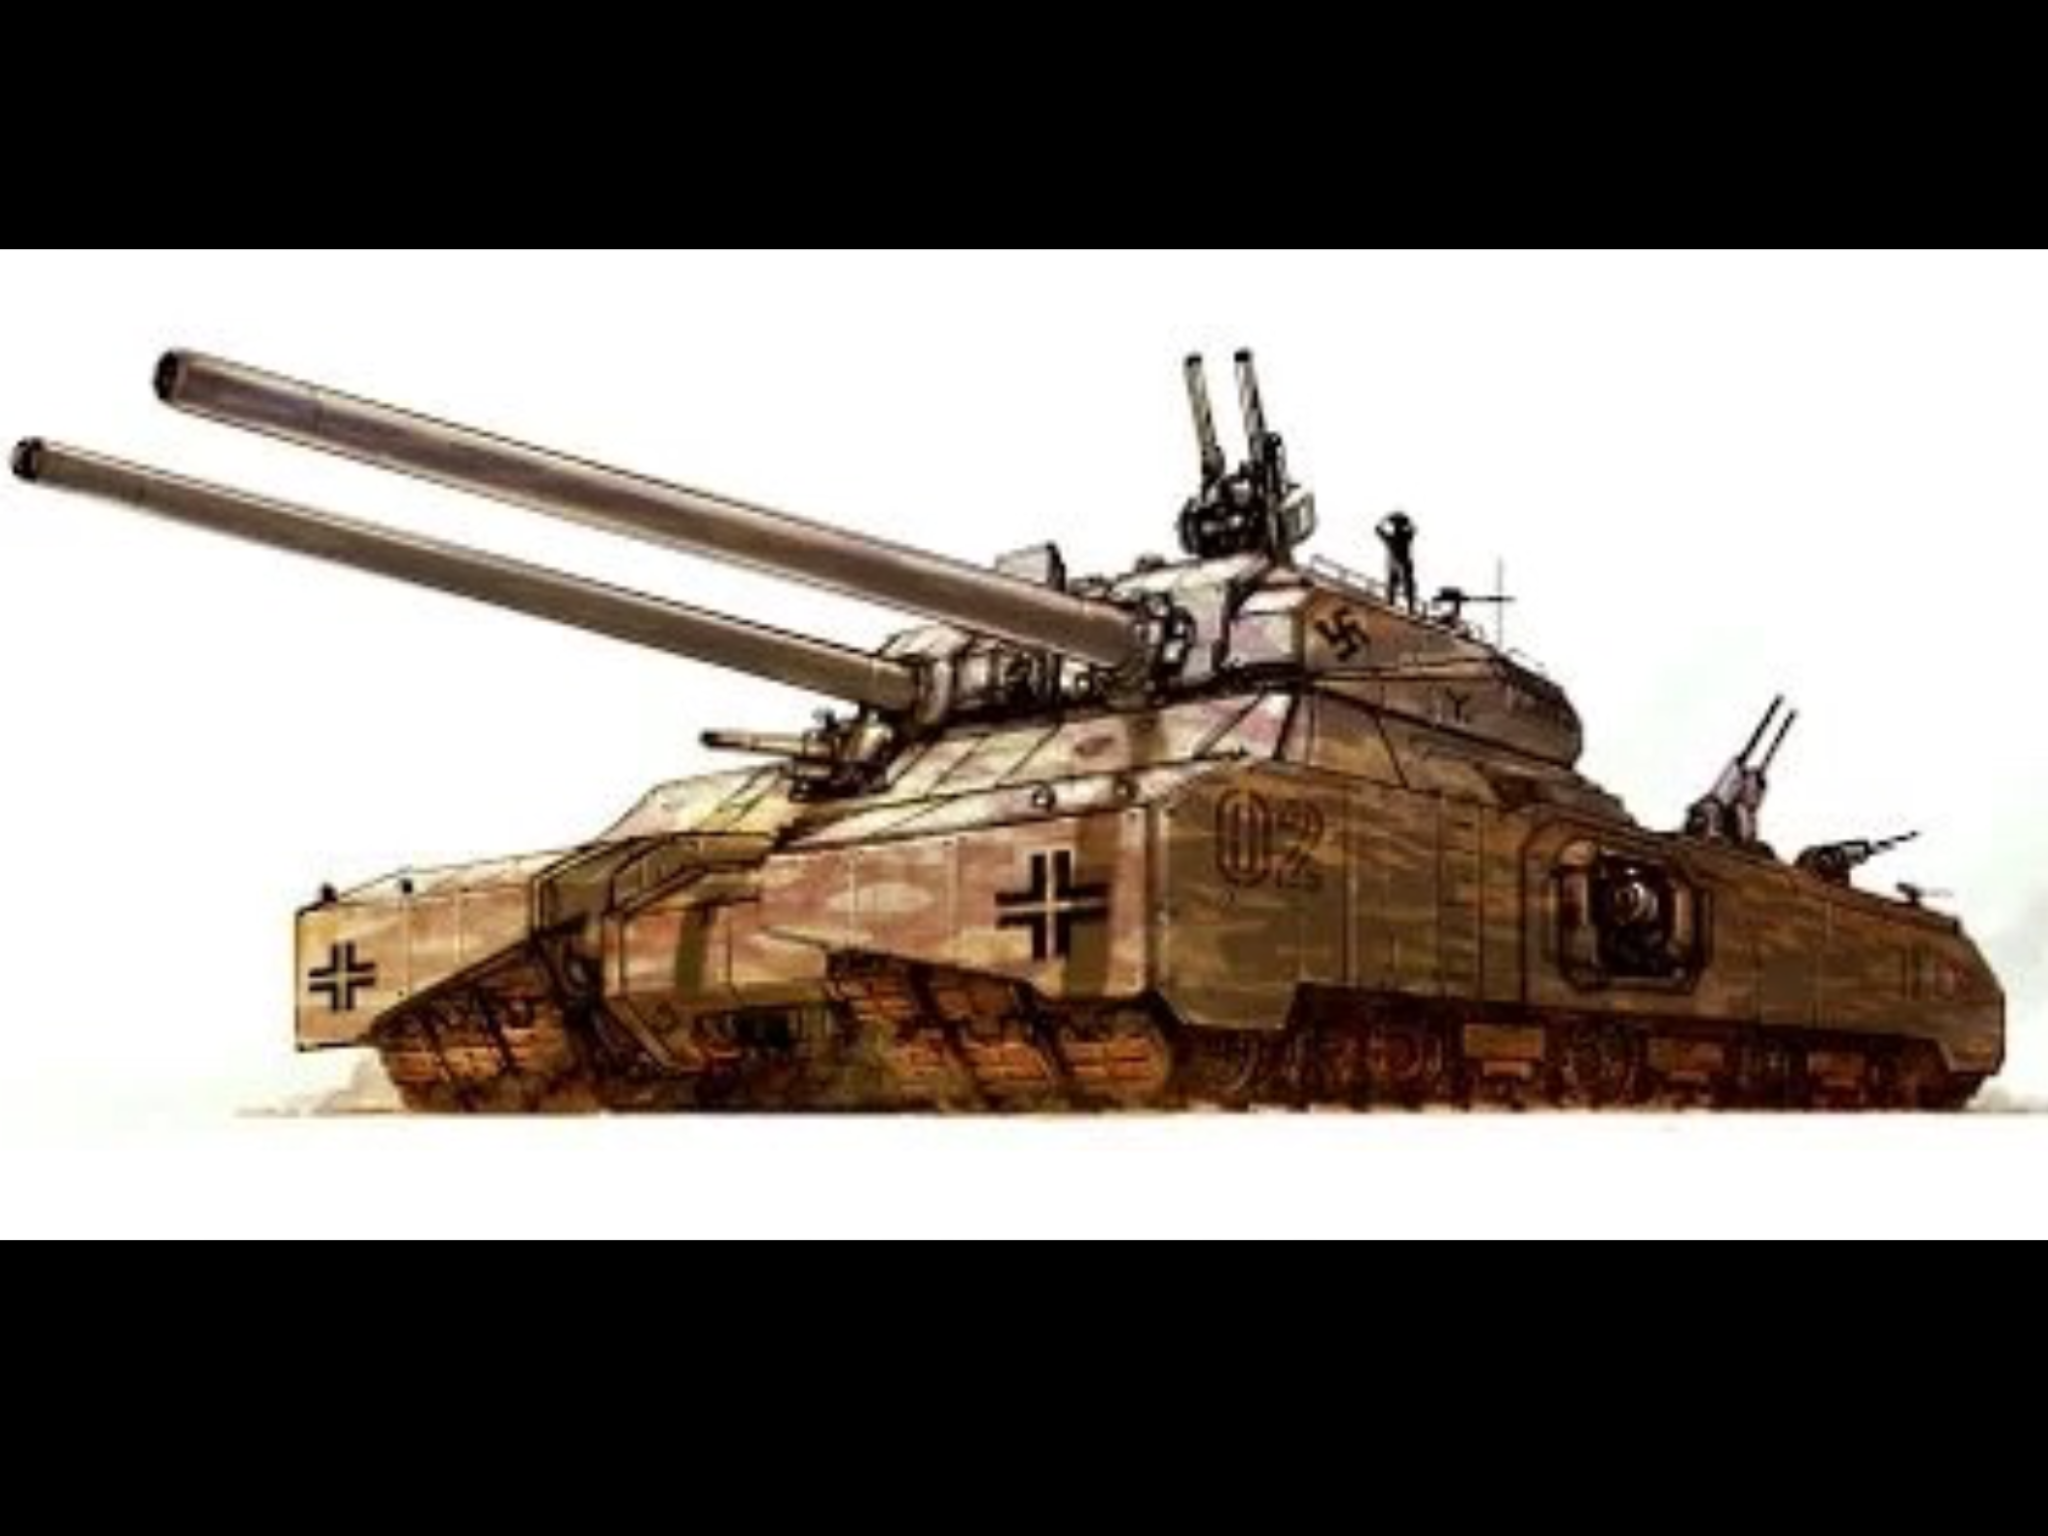 Landkreuzer P.1000 Ratte concept. Super tank, Monster tanks, Army